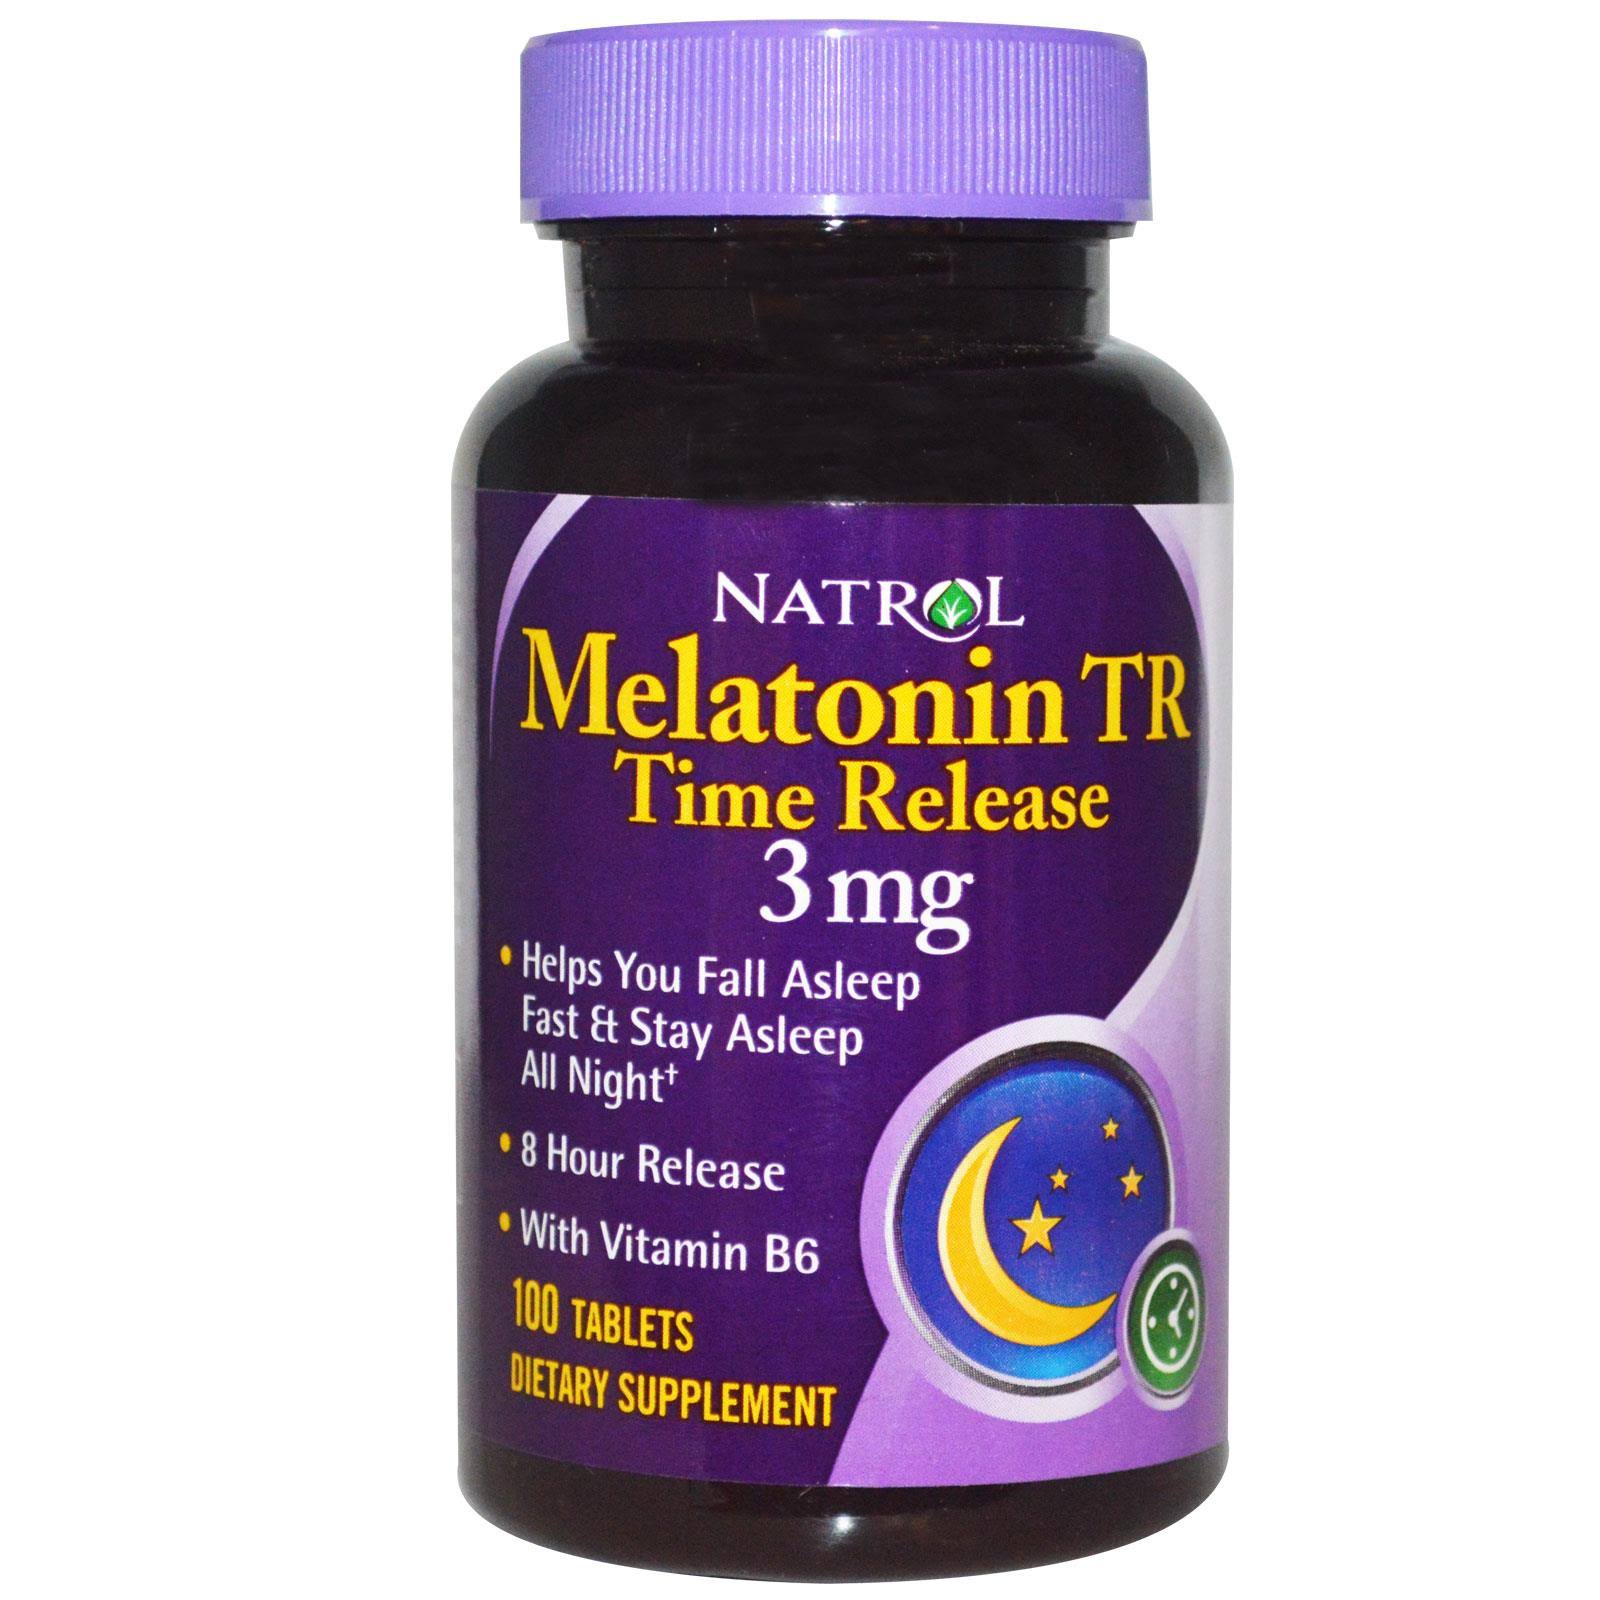 Natrol Melatonin Time Release Dietary Supplement - 3mg, 100 Tablets